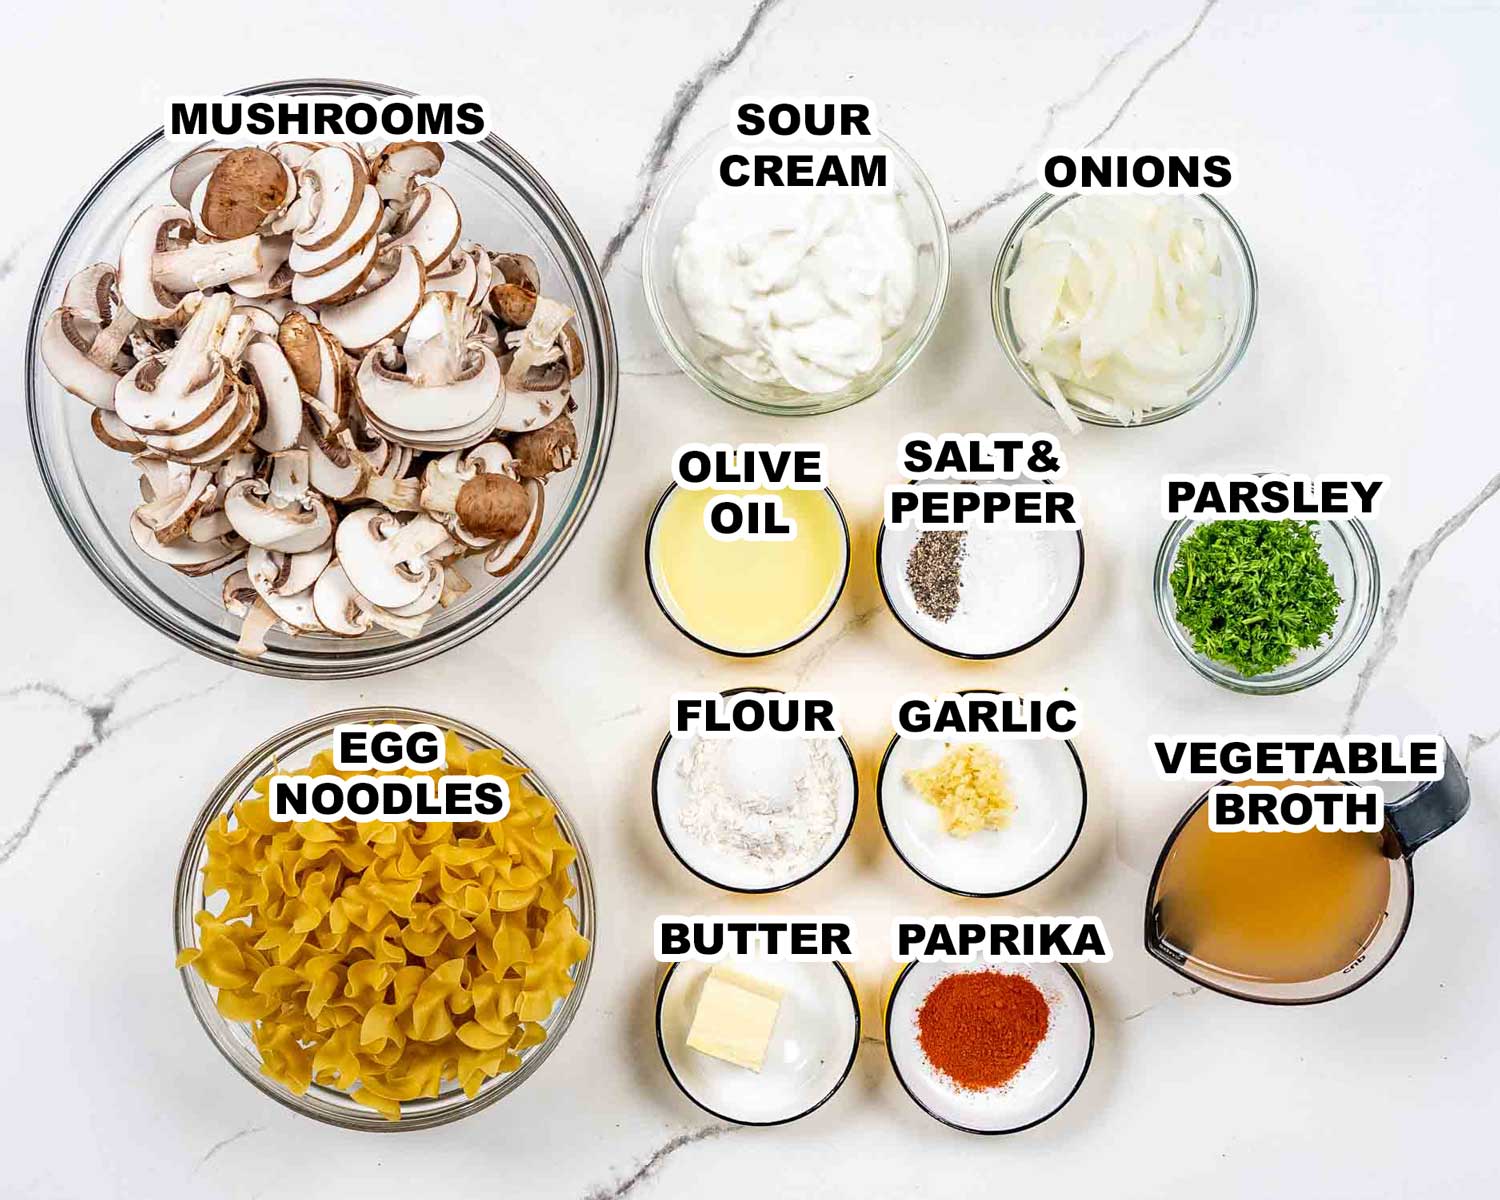 ingredients needed to make mushroom stroganoff.